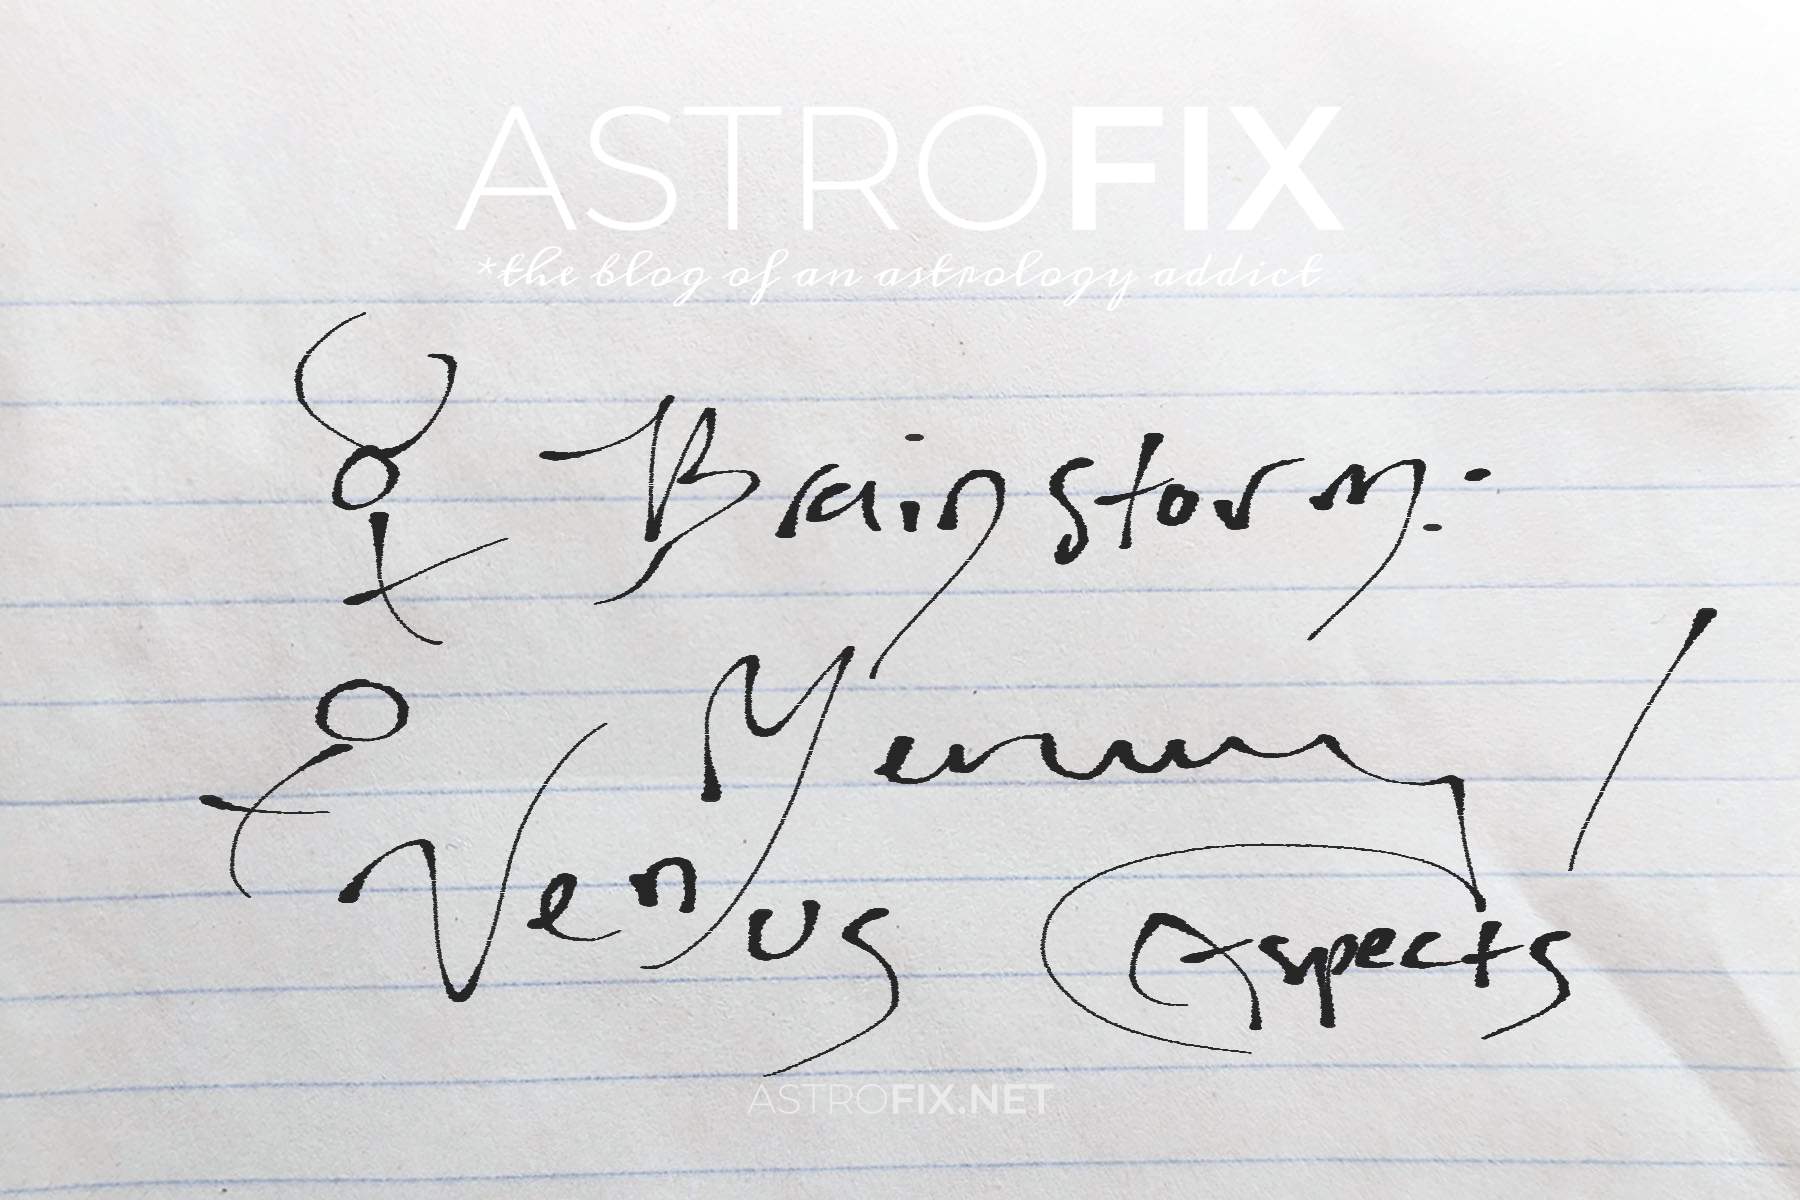 brainstorm-mercury-venus-astrology-aspects